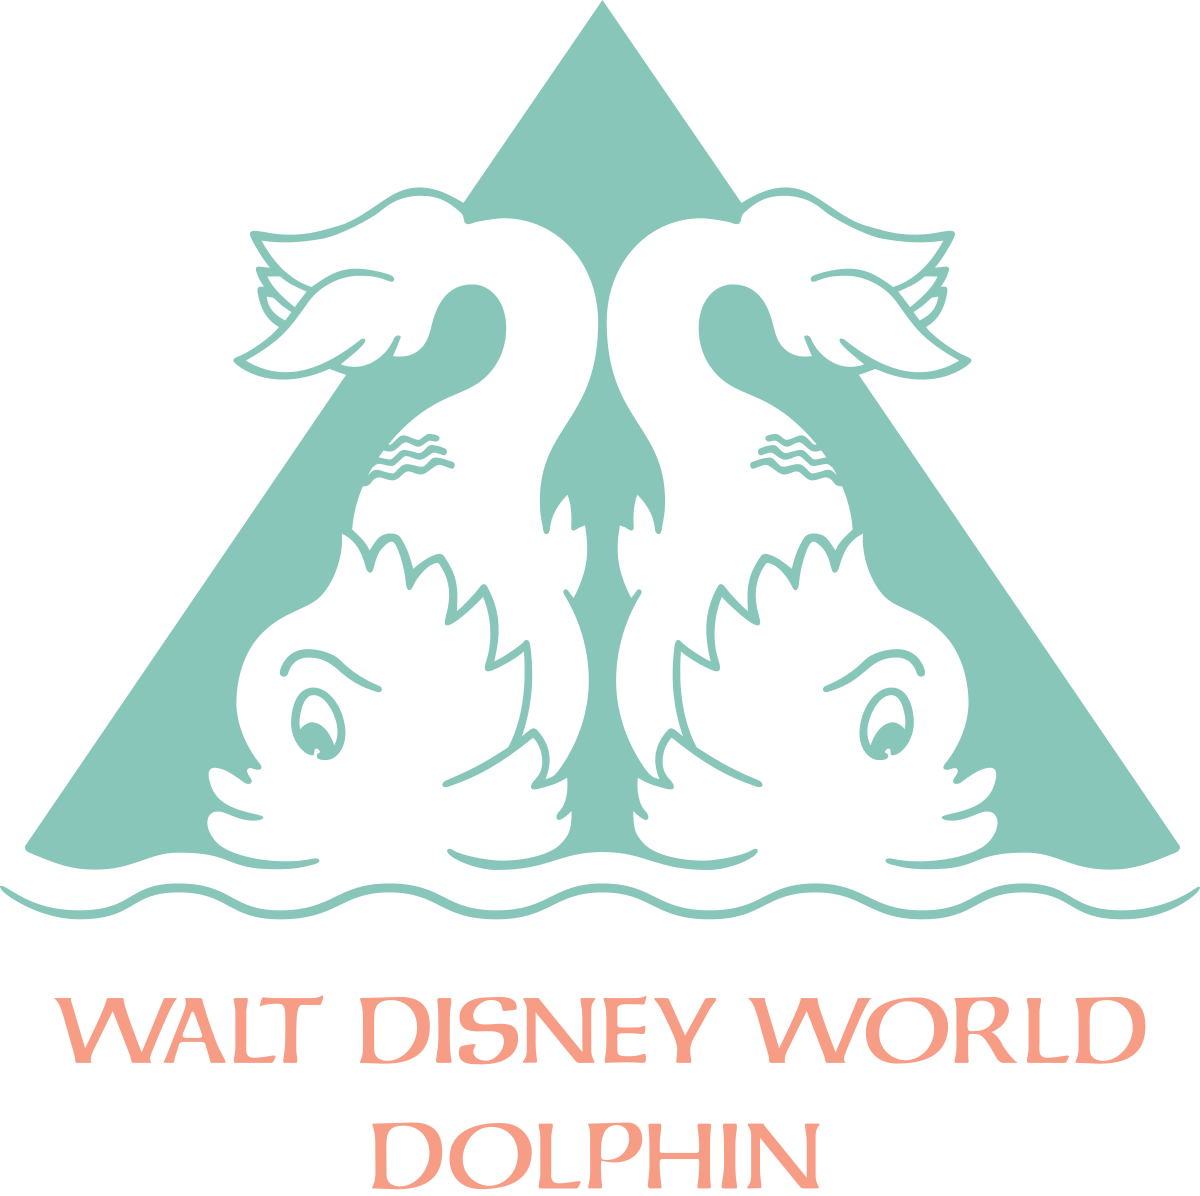 Disney Resorts Logo - Walt Disney World Dolphin